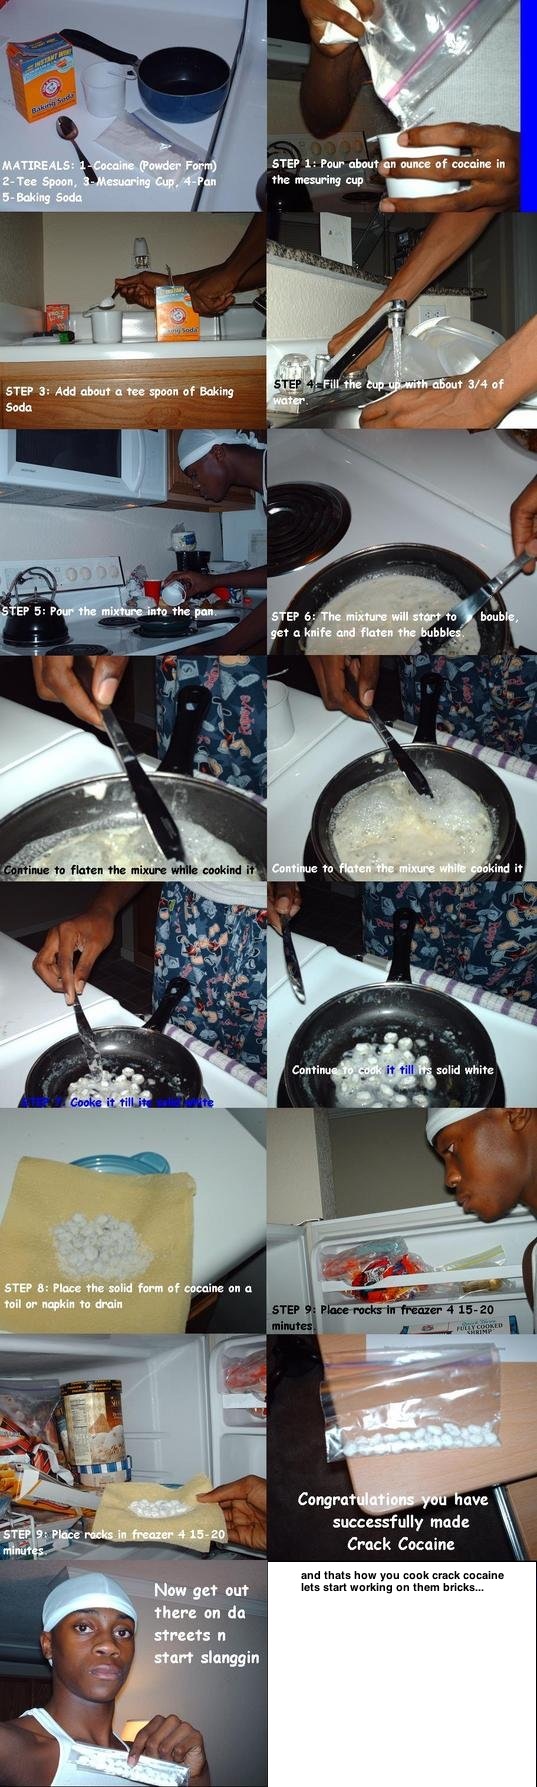 Cooking-crack-cocaine-101.jpg